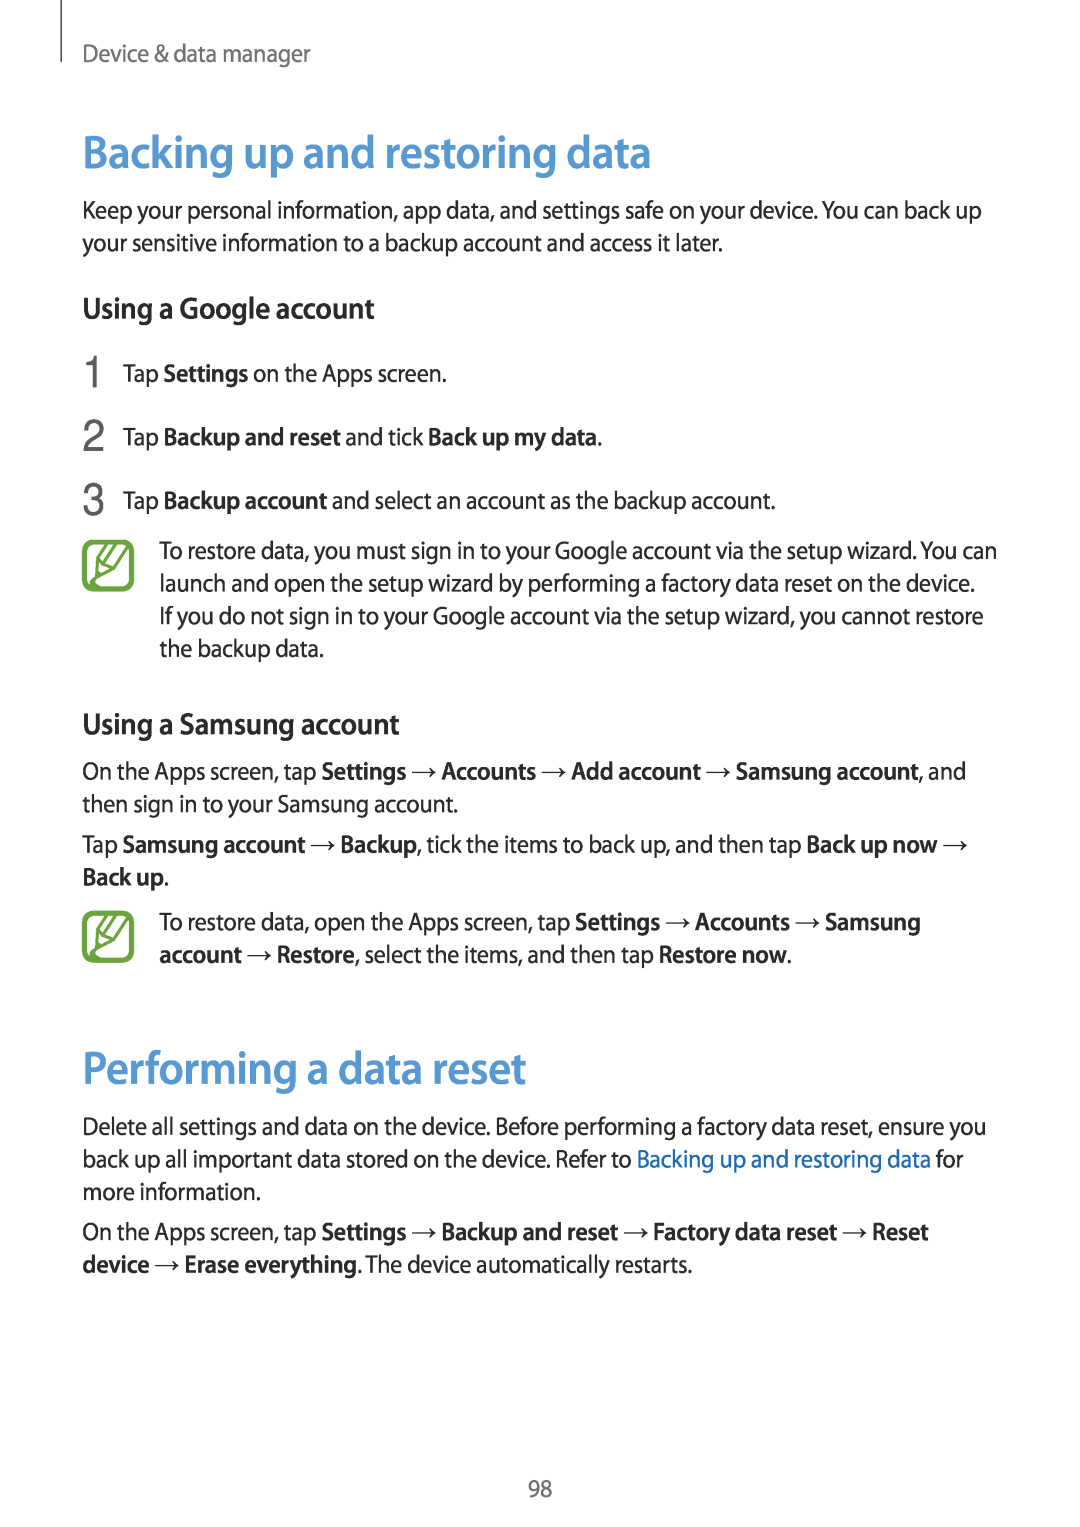 Samsung SM-A300FZDUWIN, SM-A300FZDDSEE manual Backing up and restoring data, Performing a data reset, Using a Google account 